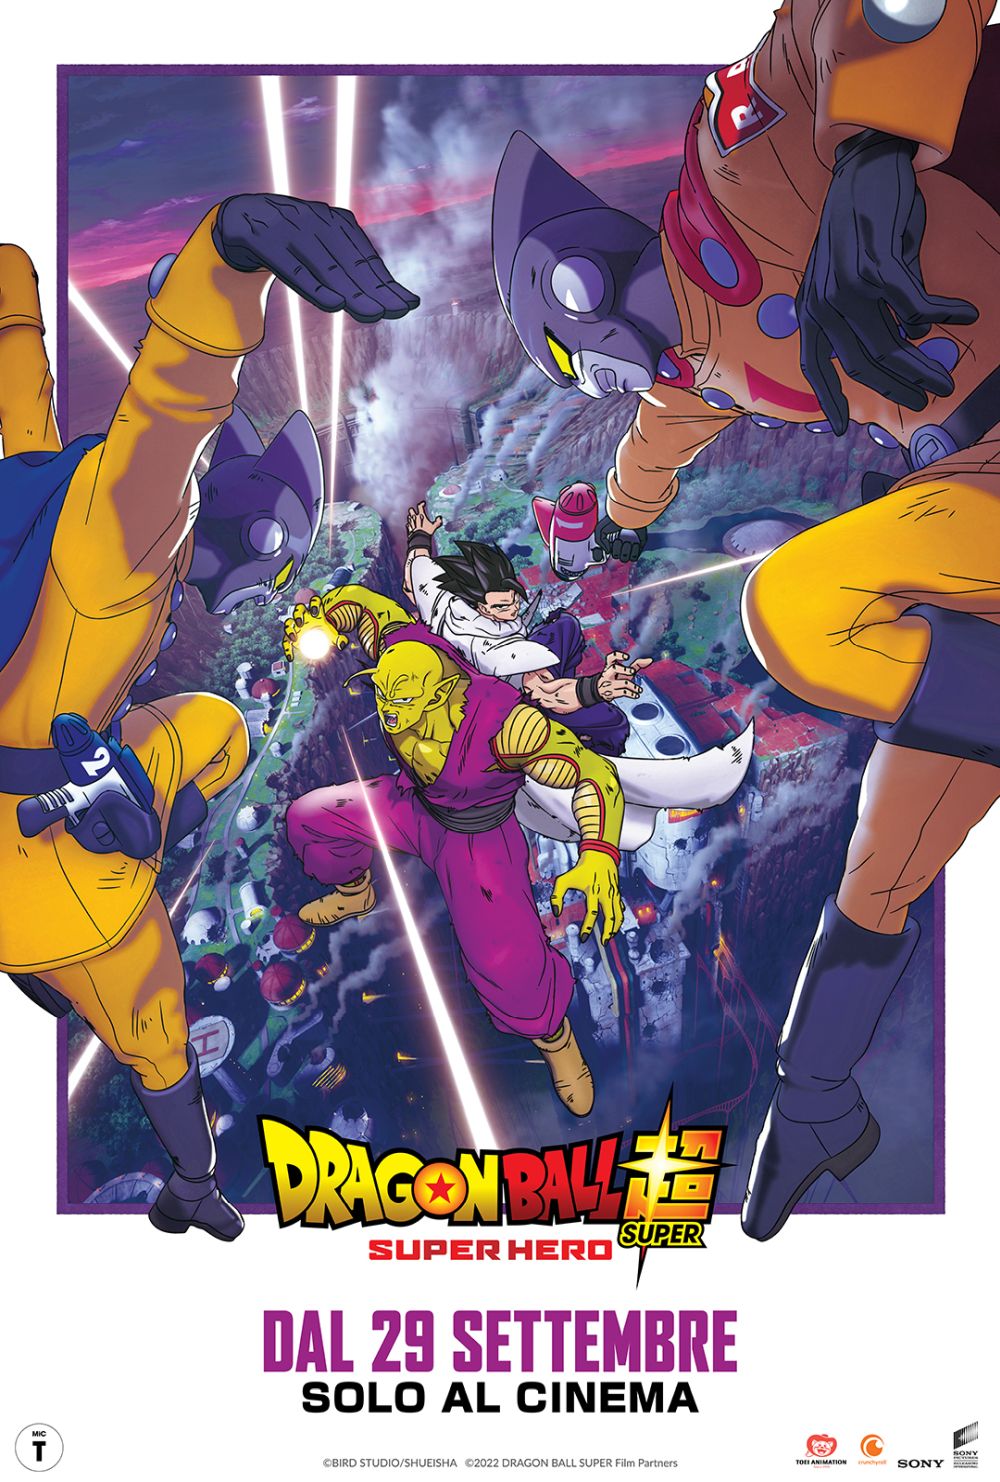 https://leganerd.com/wp-content/uploads/2022/09/Dragon-Ball-Super-superhero-poster-2.jpg